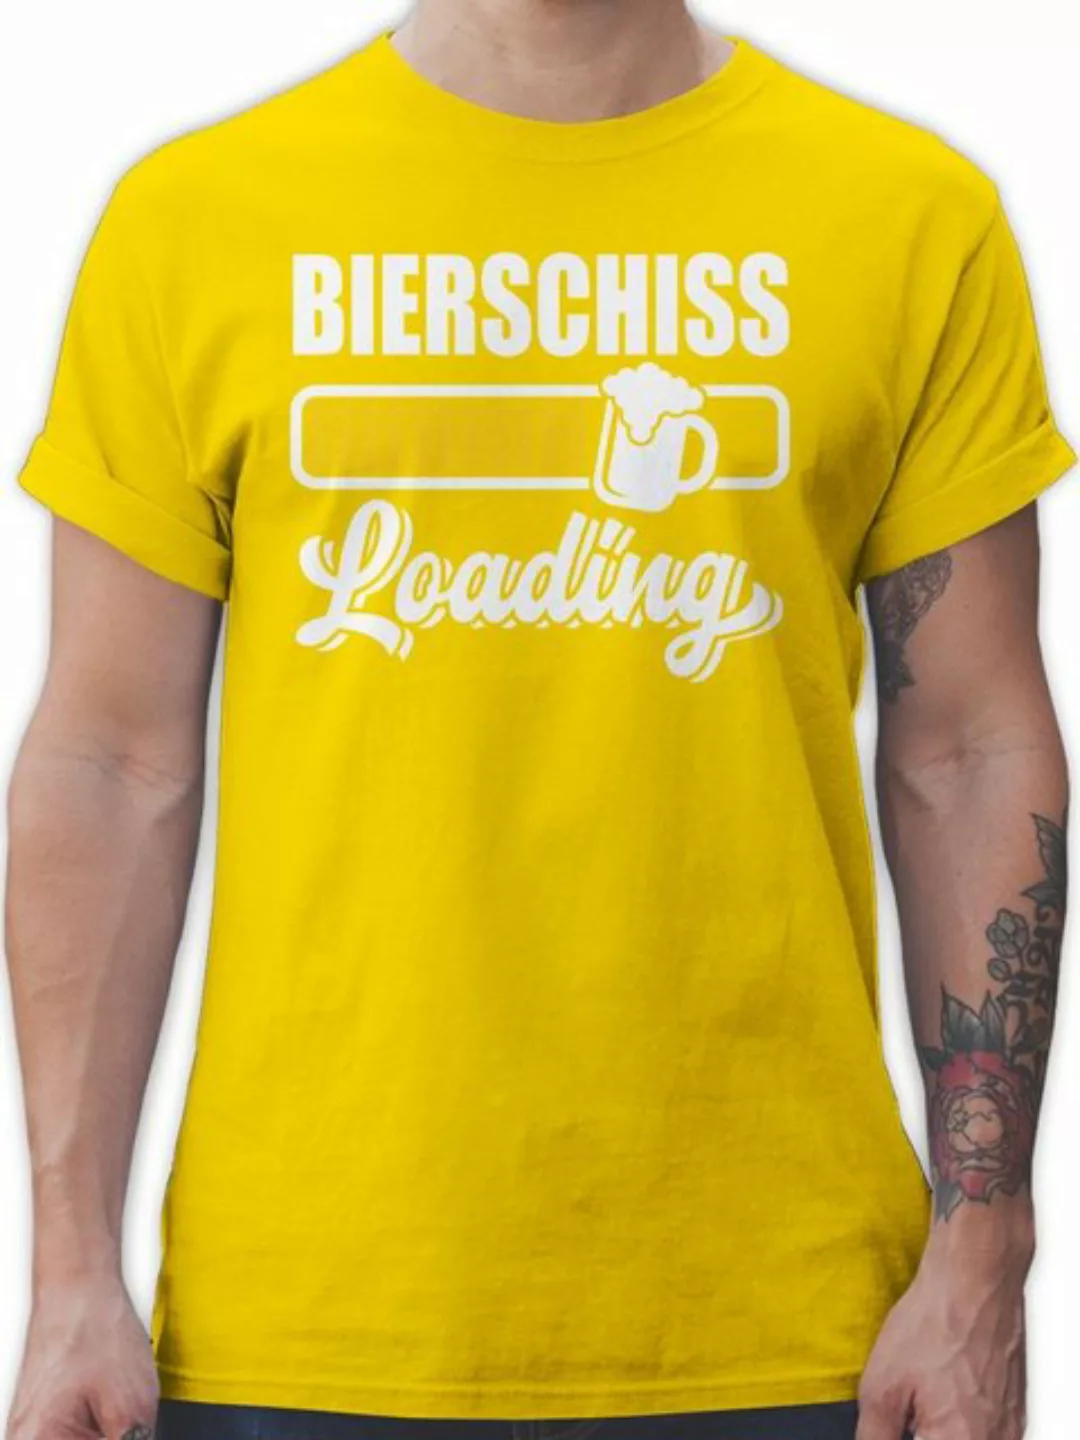 Shirtracer T-Shirt Bierschiss loading Party & Alkohol Herren günstig online kaufen